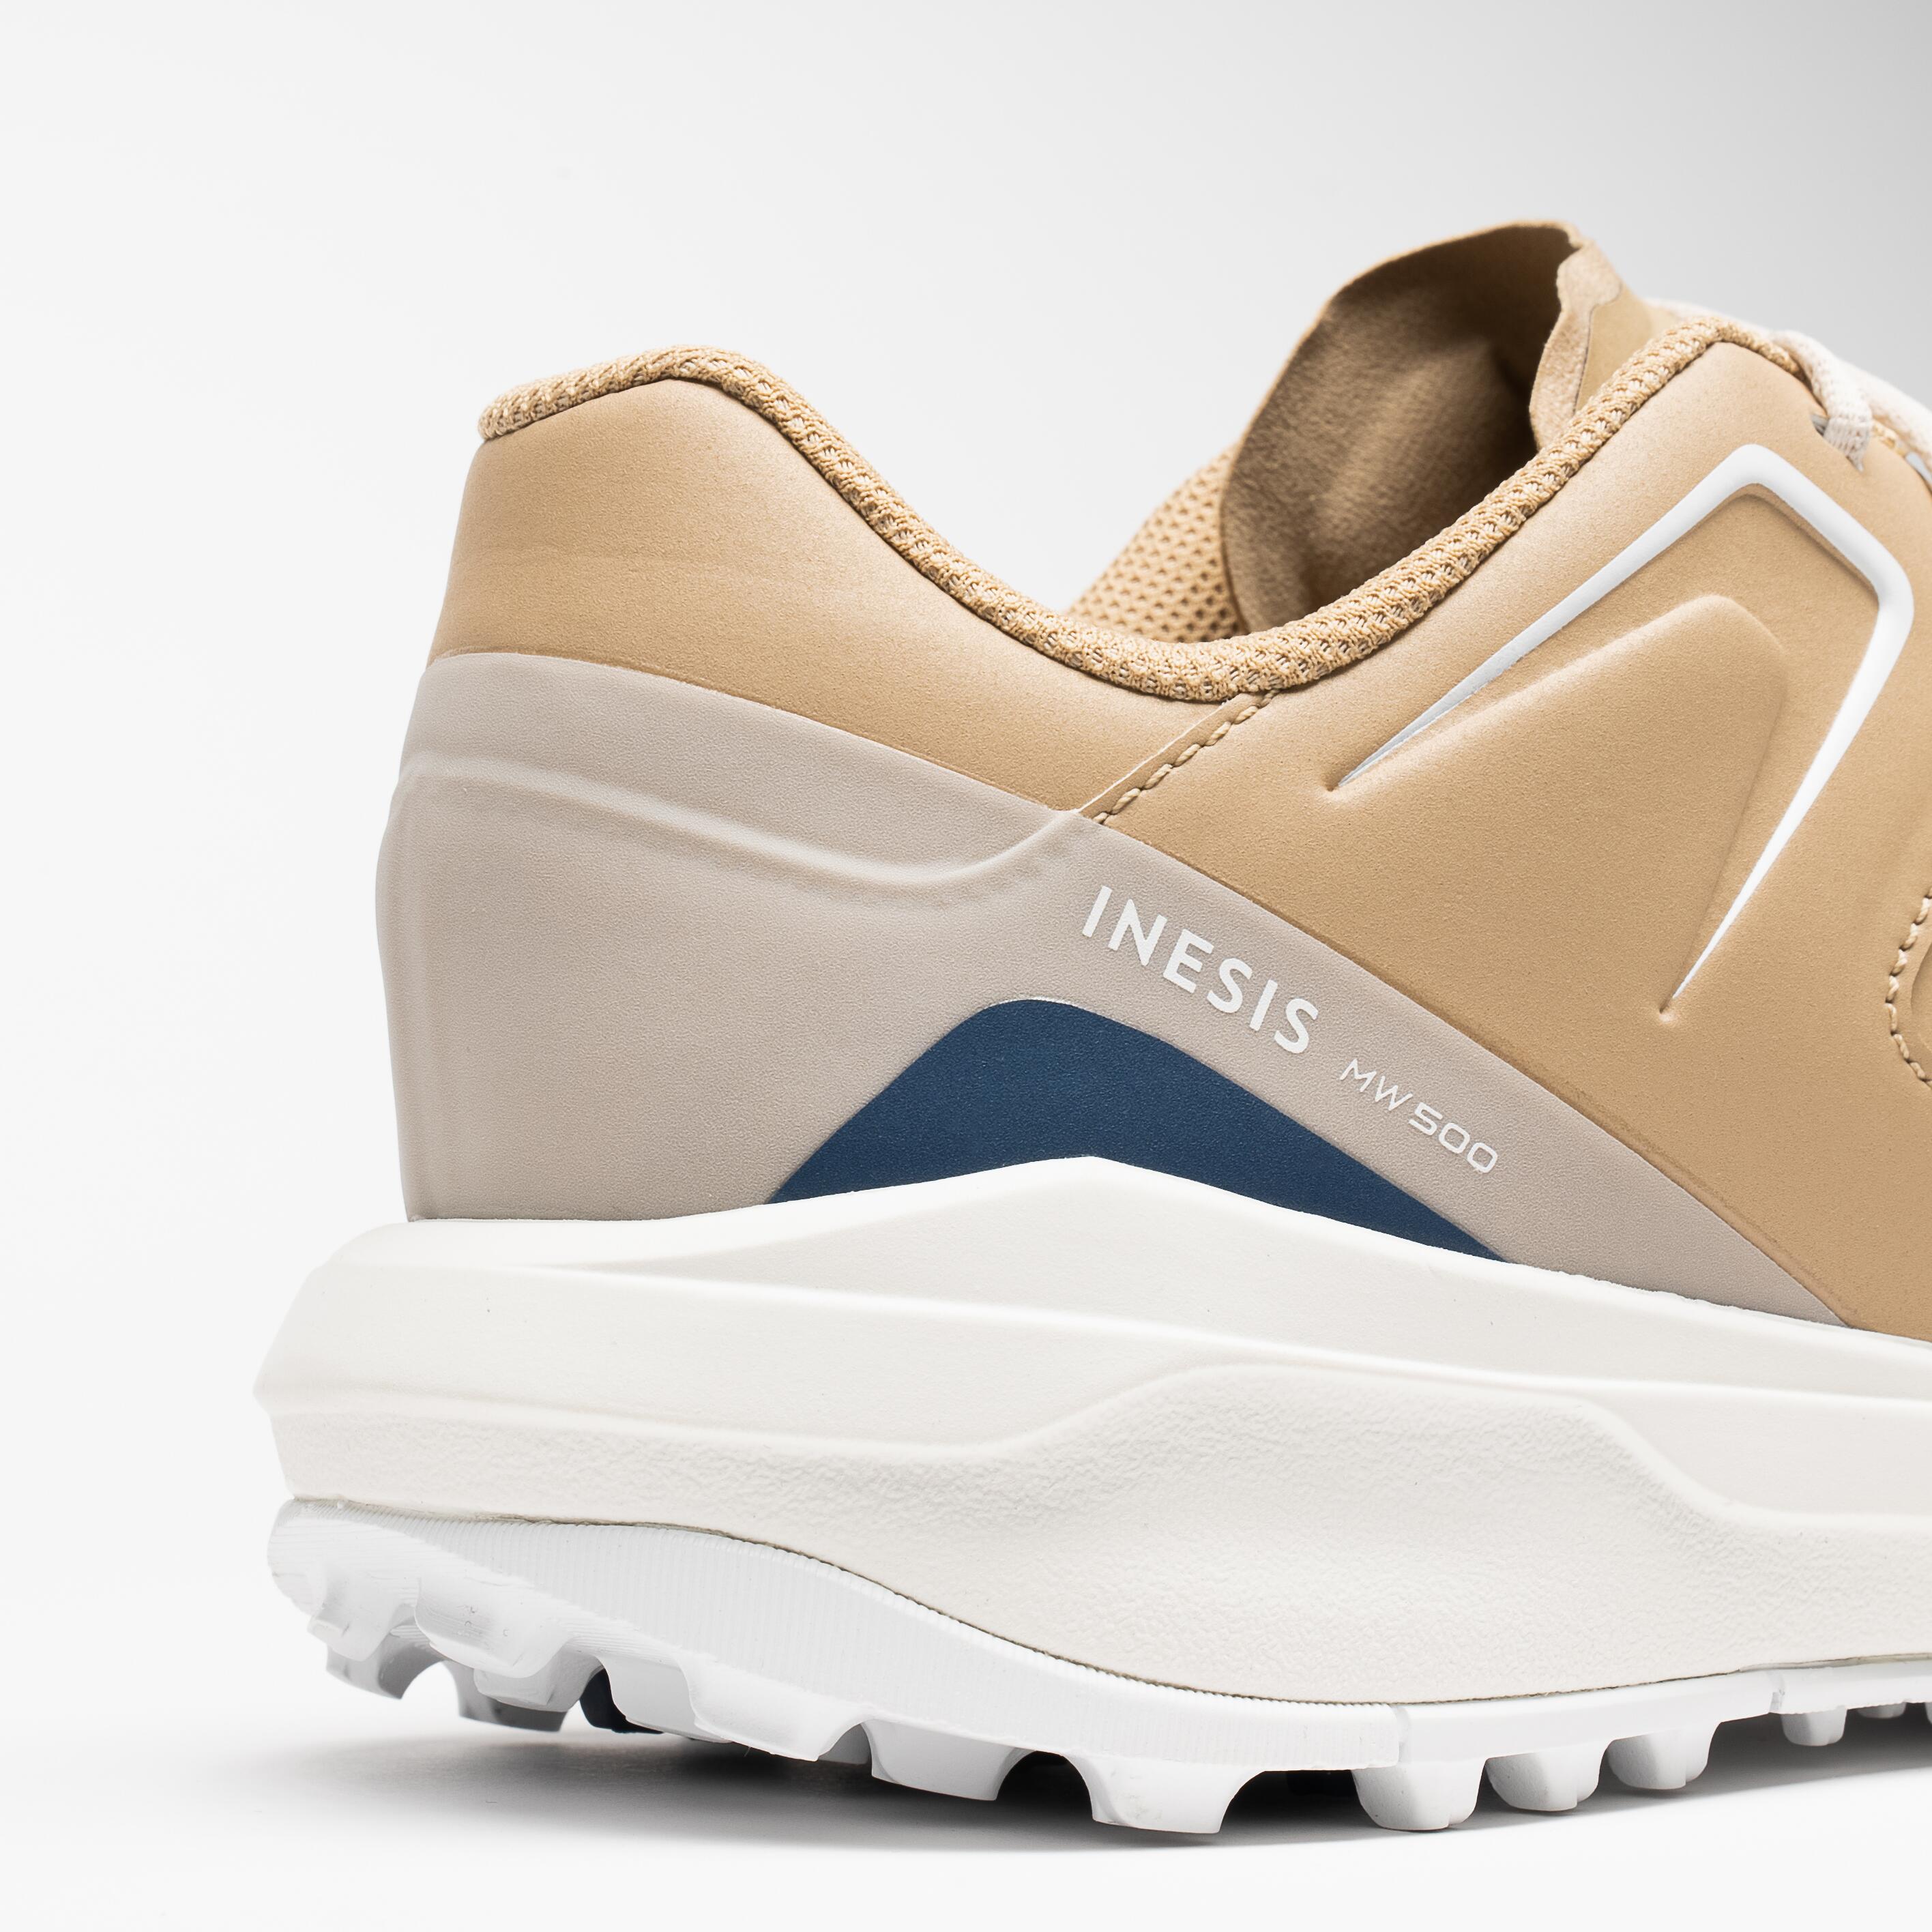 Men's Waterproof Golf Shoes - MW 500 Beige 6/7